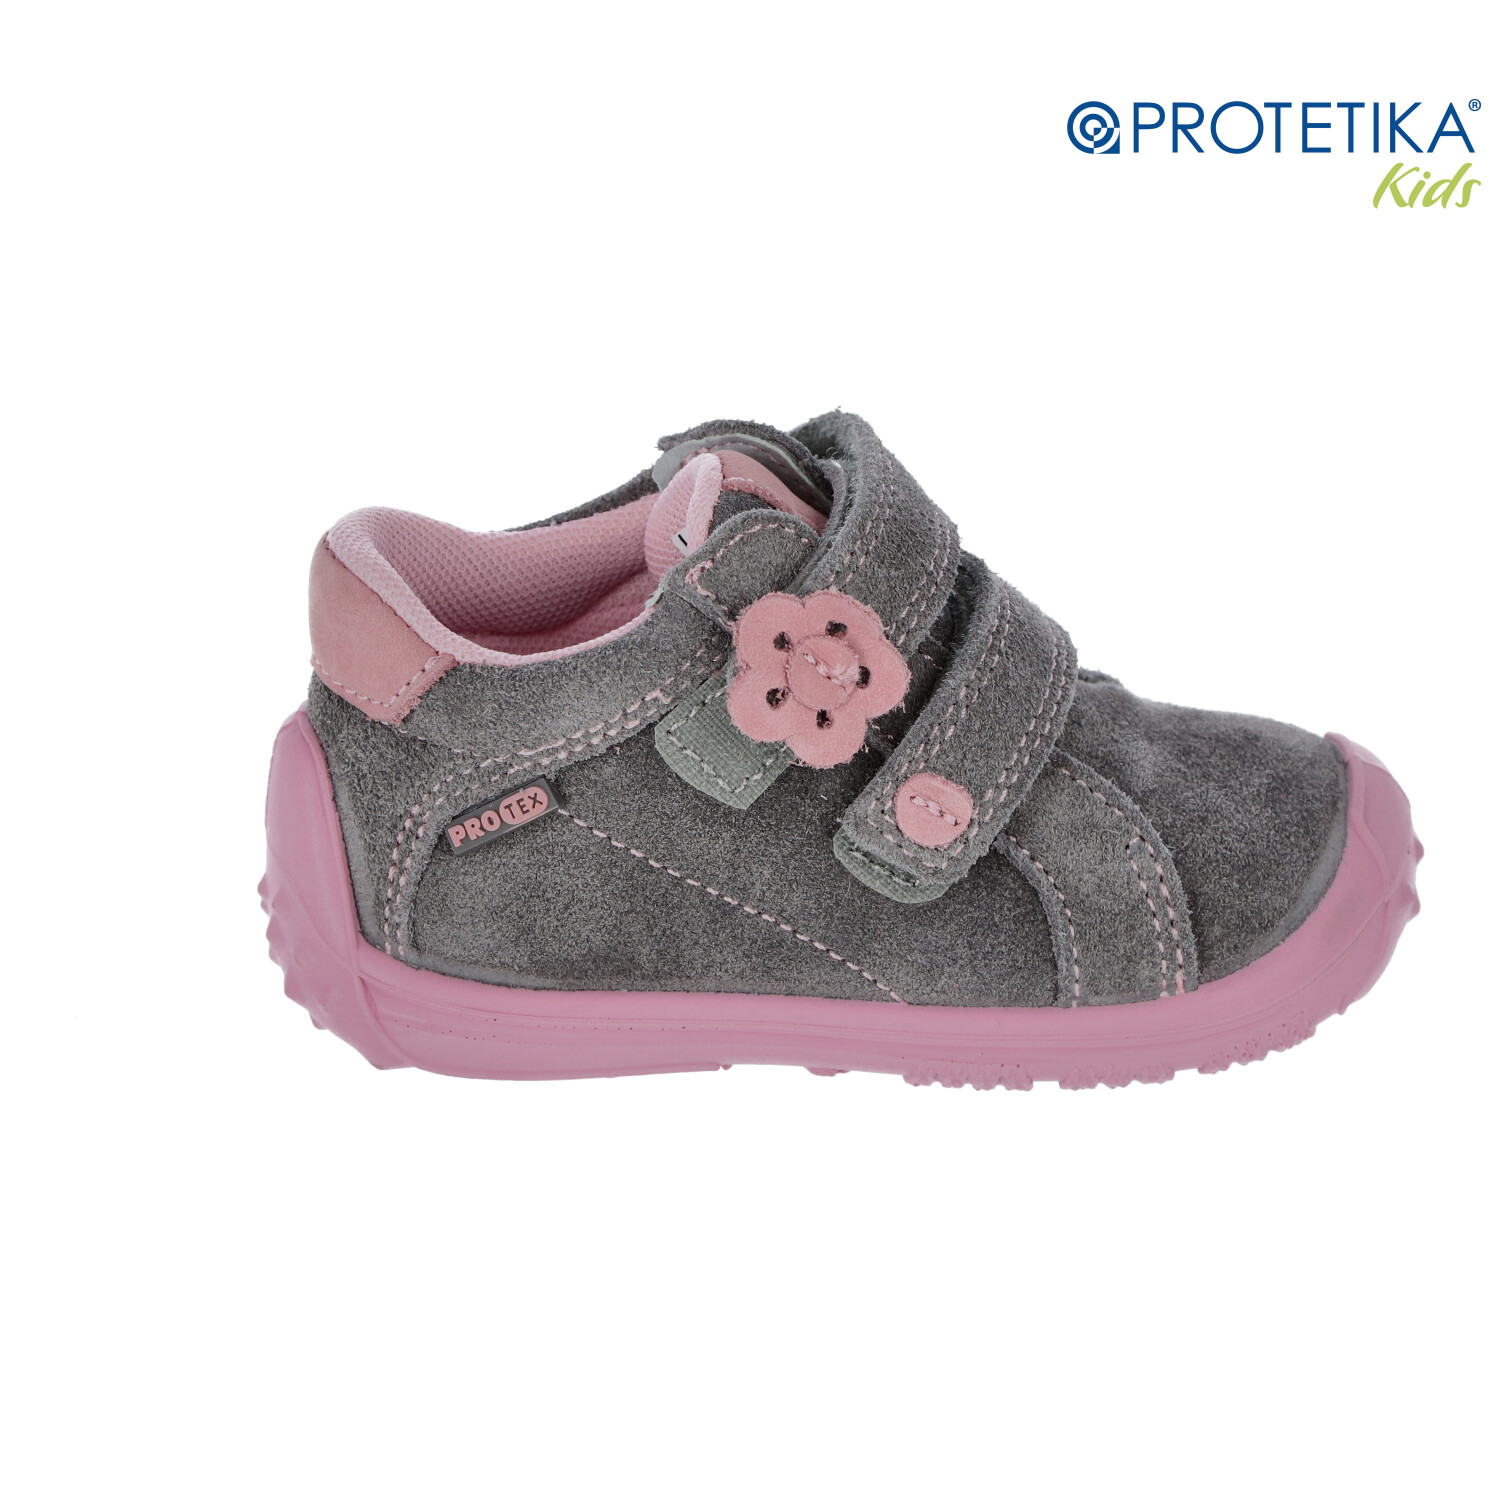 Protetika - topánky s membránou PRO-tex LENA grey